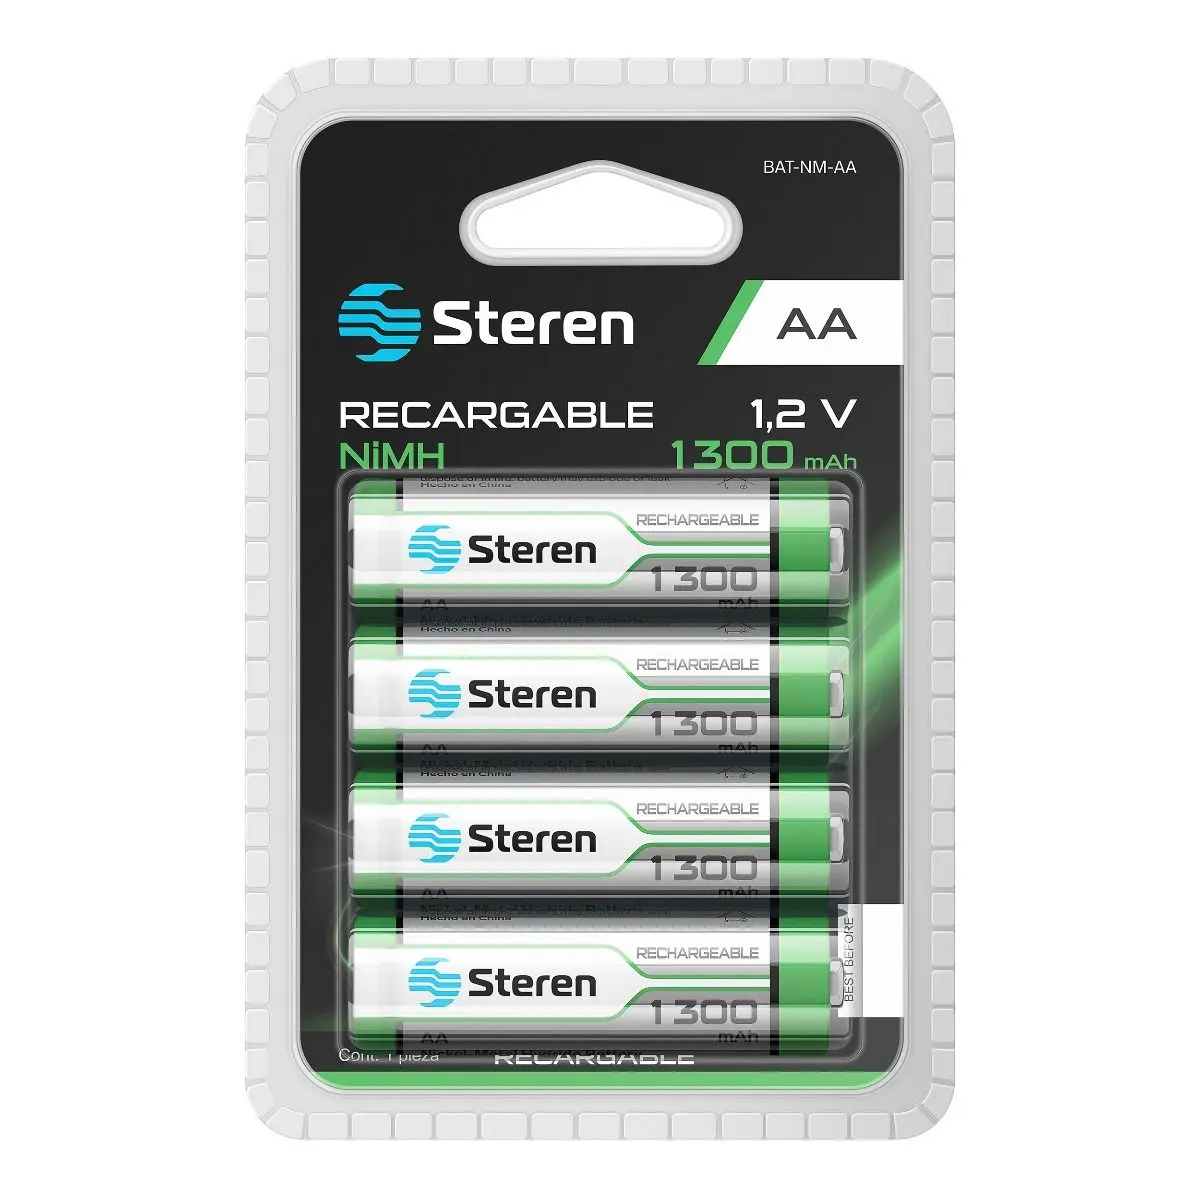 steren baterias - Qué tan buenas son las baterías Steren